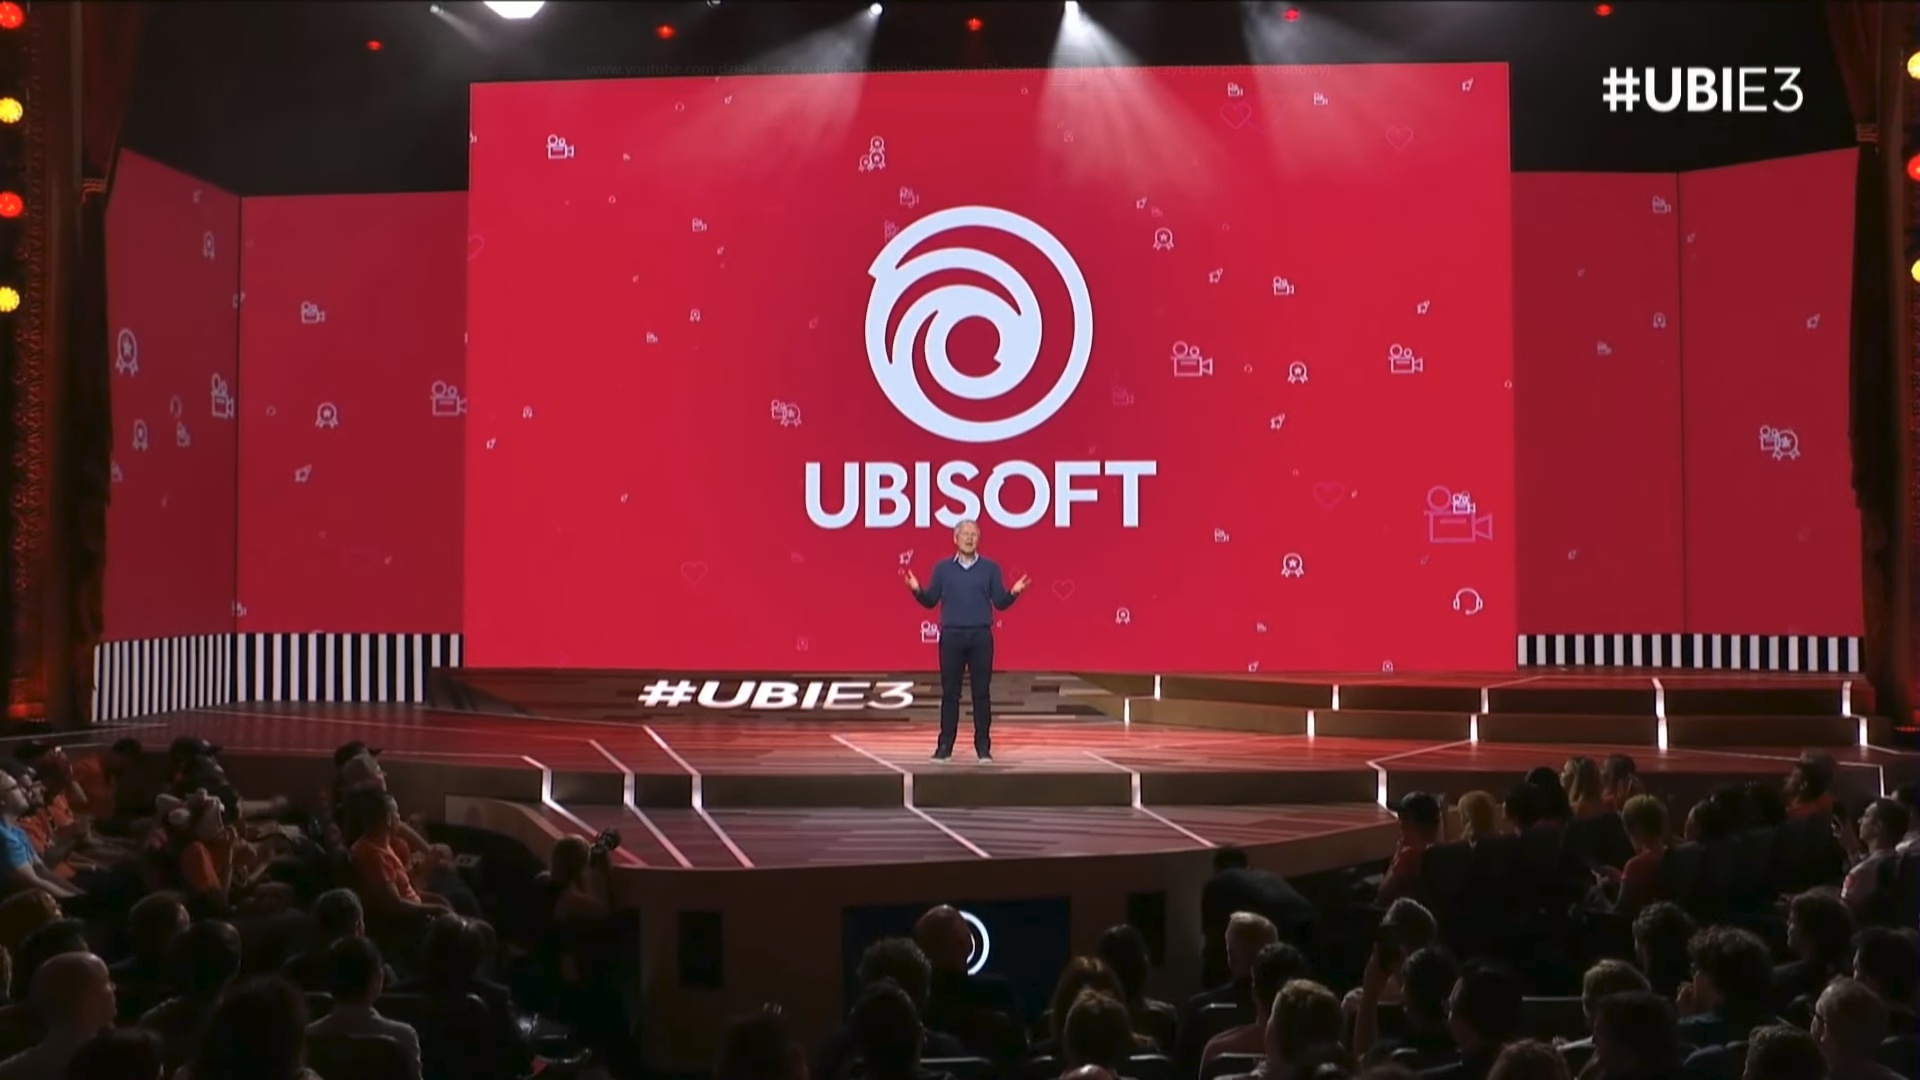 Ubisoft Electronic Arts EA Square Enix E3 2019 konferencja